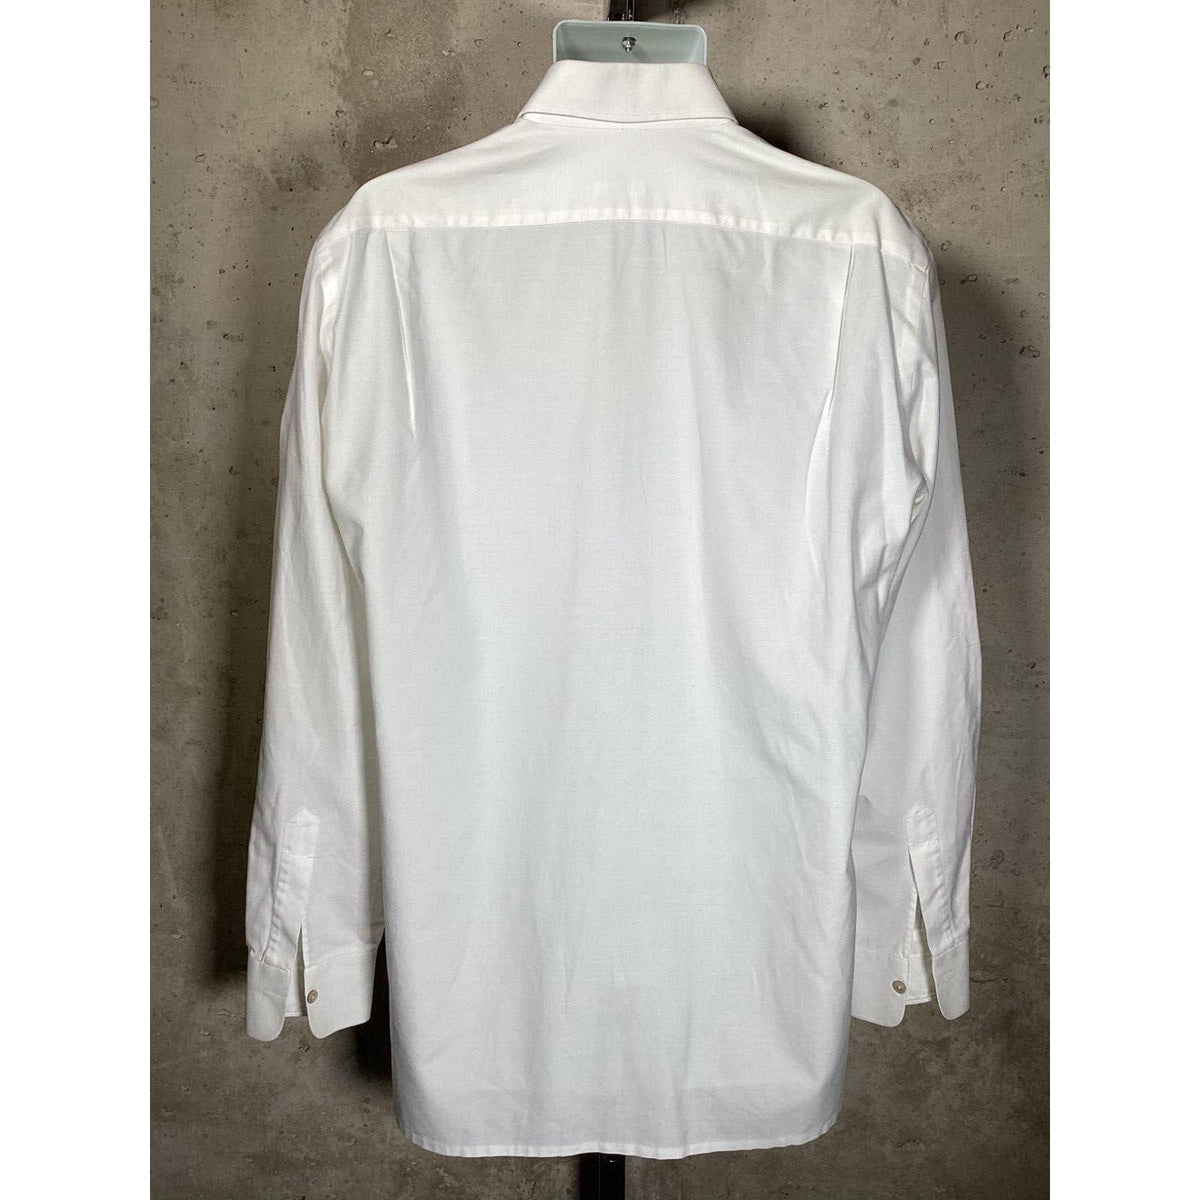 Kiton White Button Up Shirt Sz. Large